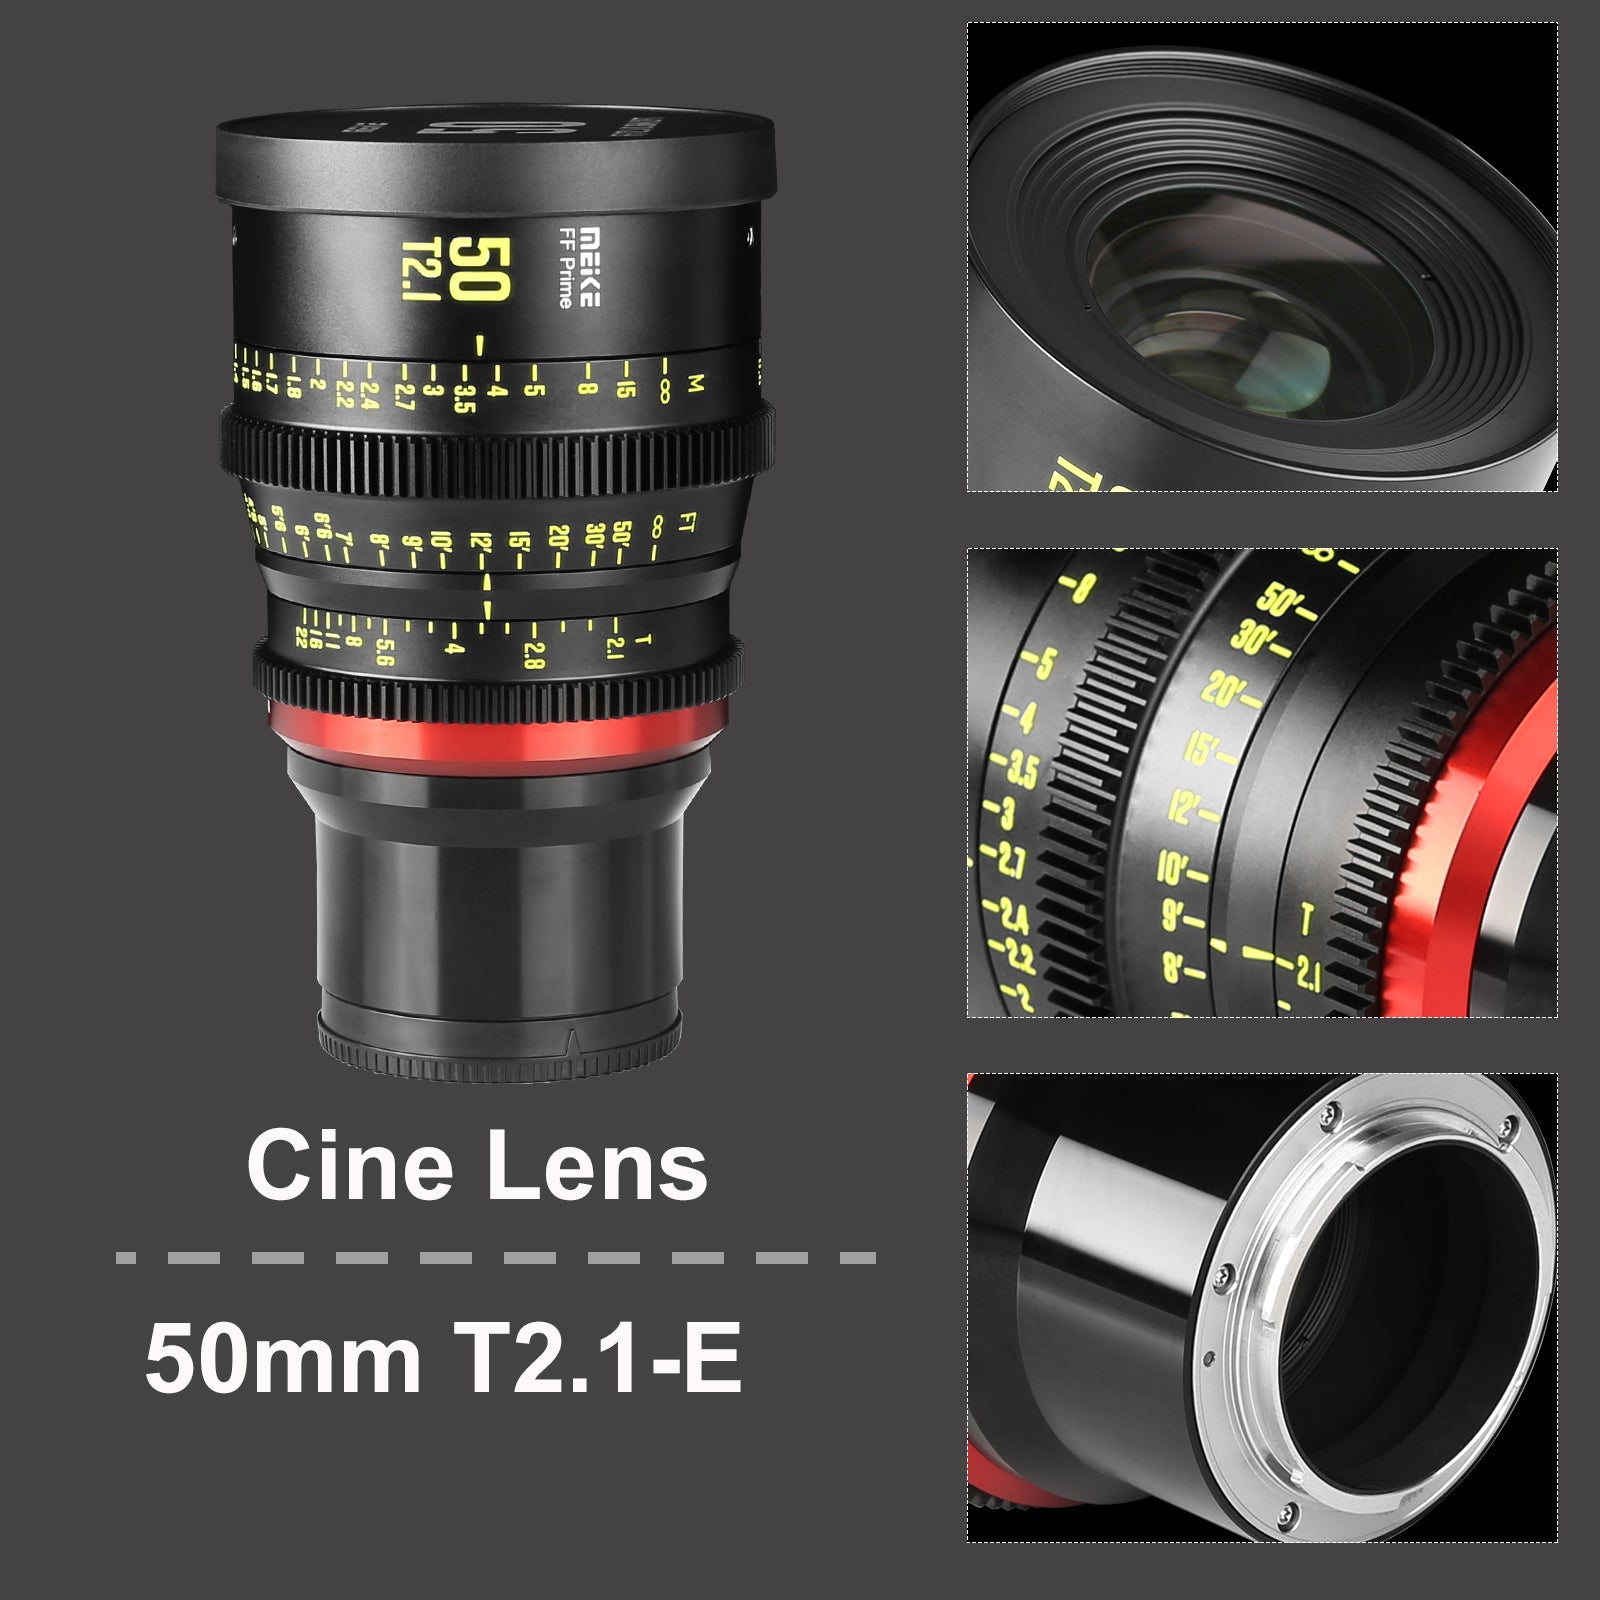 Meike Cinema Full Frame Cinema Prime 50mm T2.1 Lens (Sony E Mount) in Different Perspectives